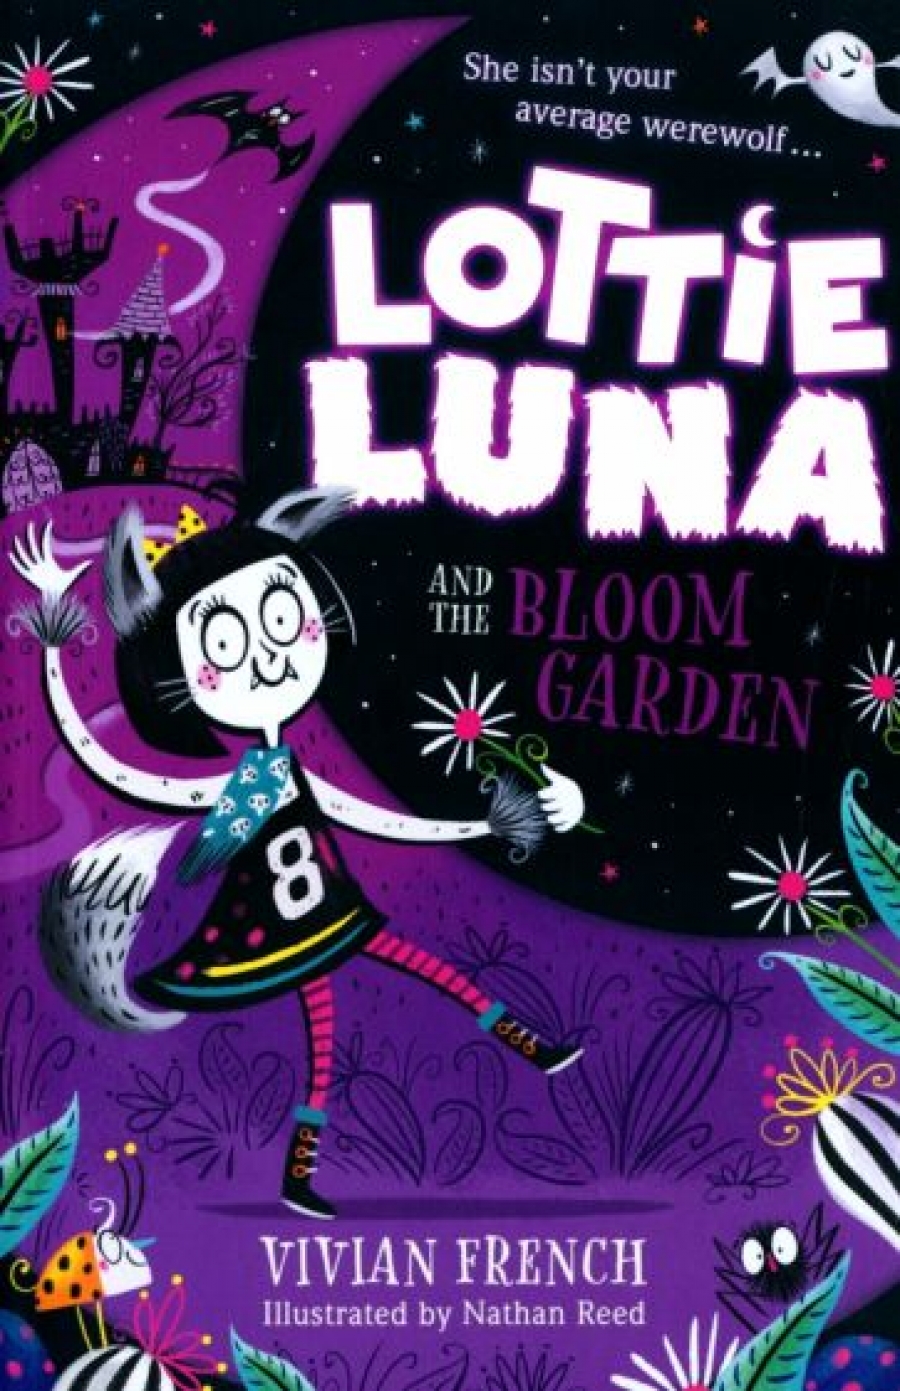 French Vivian Lottie Luna and the Bloom Garden 